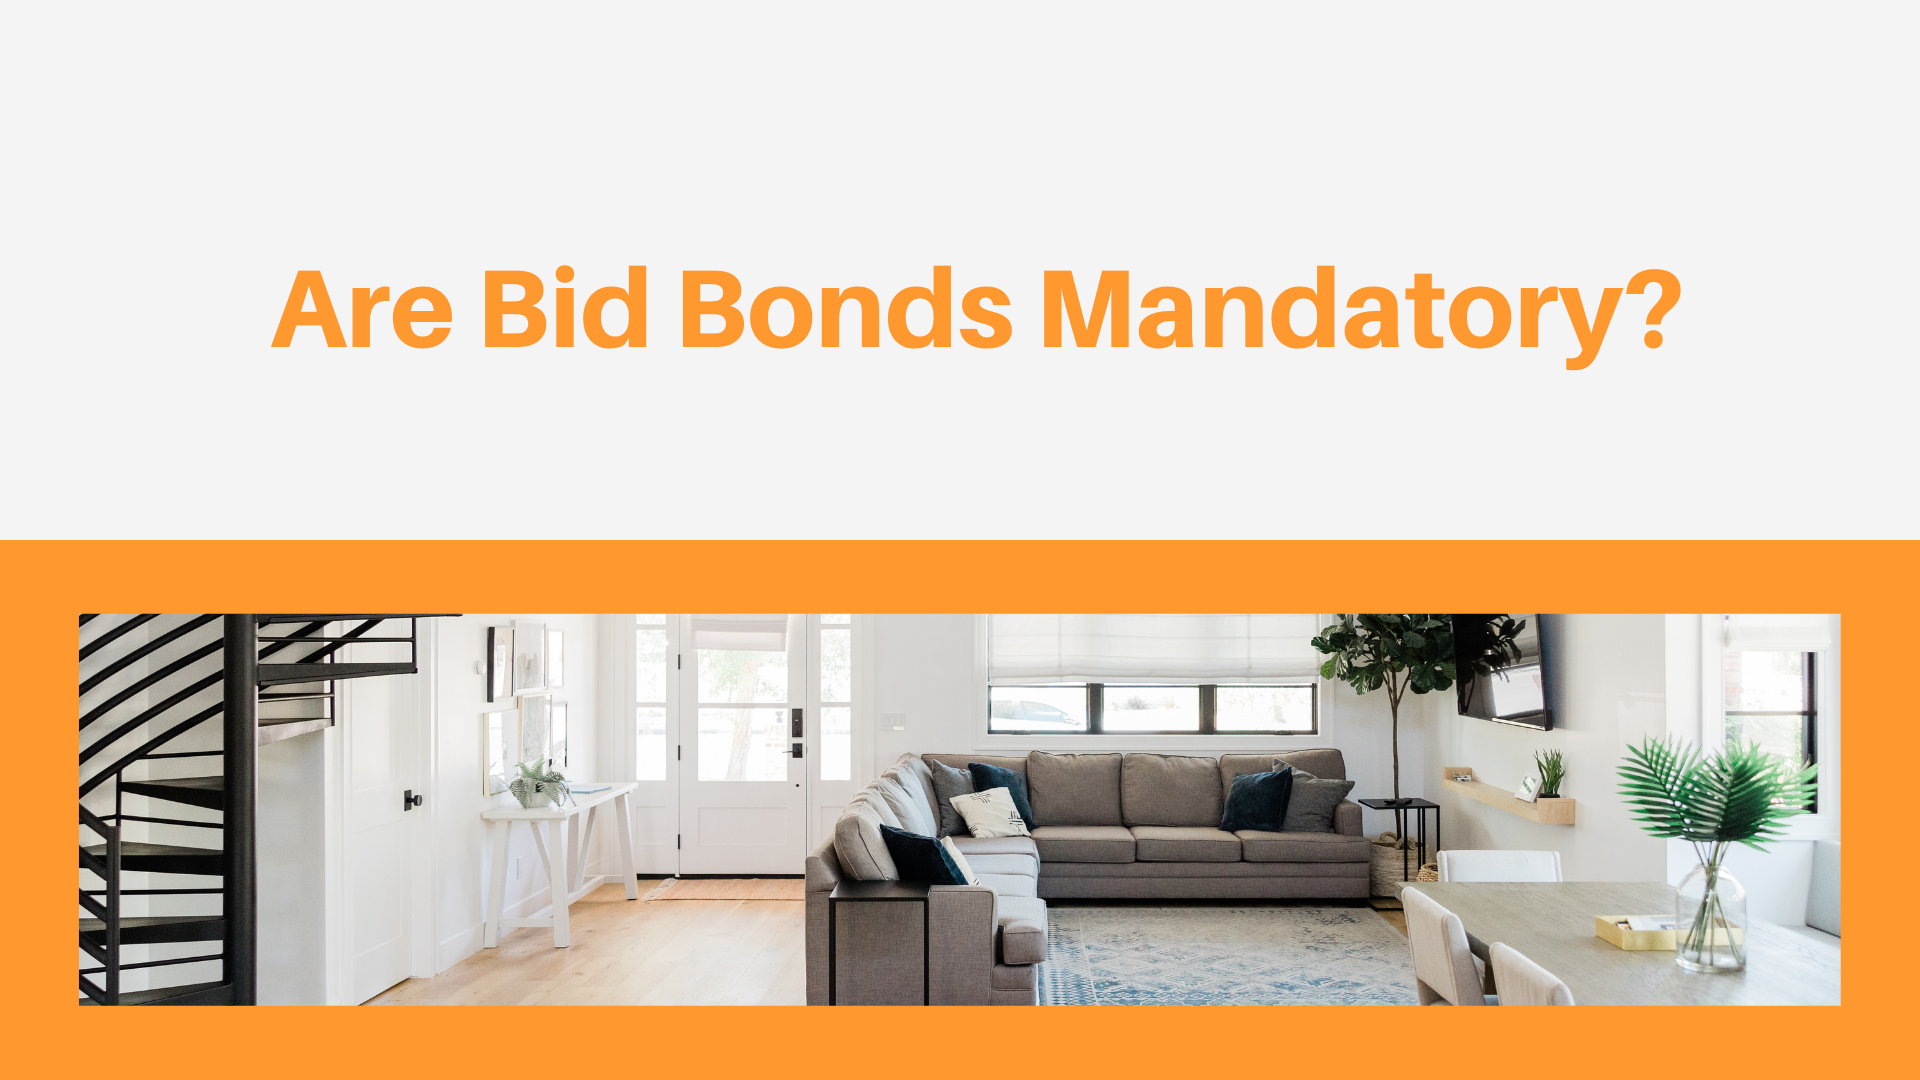 bid bond - Are bid bonds mandatory - minimalist home